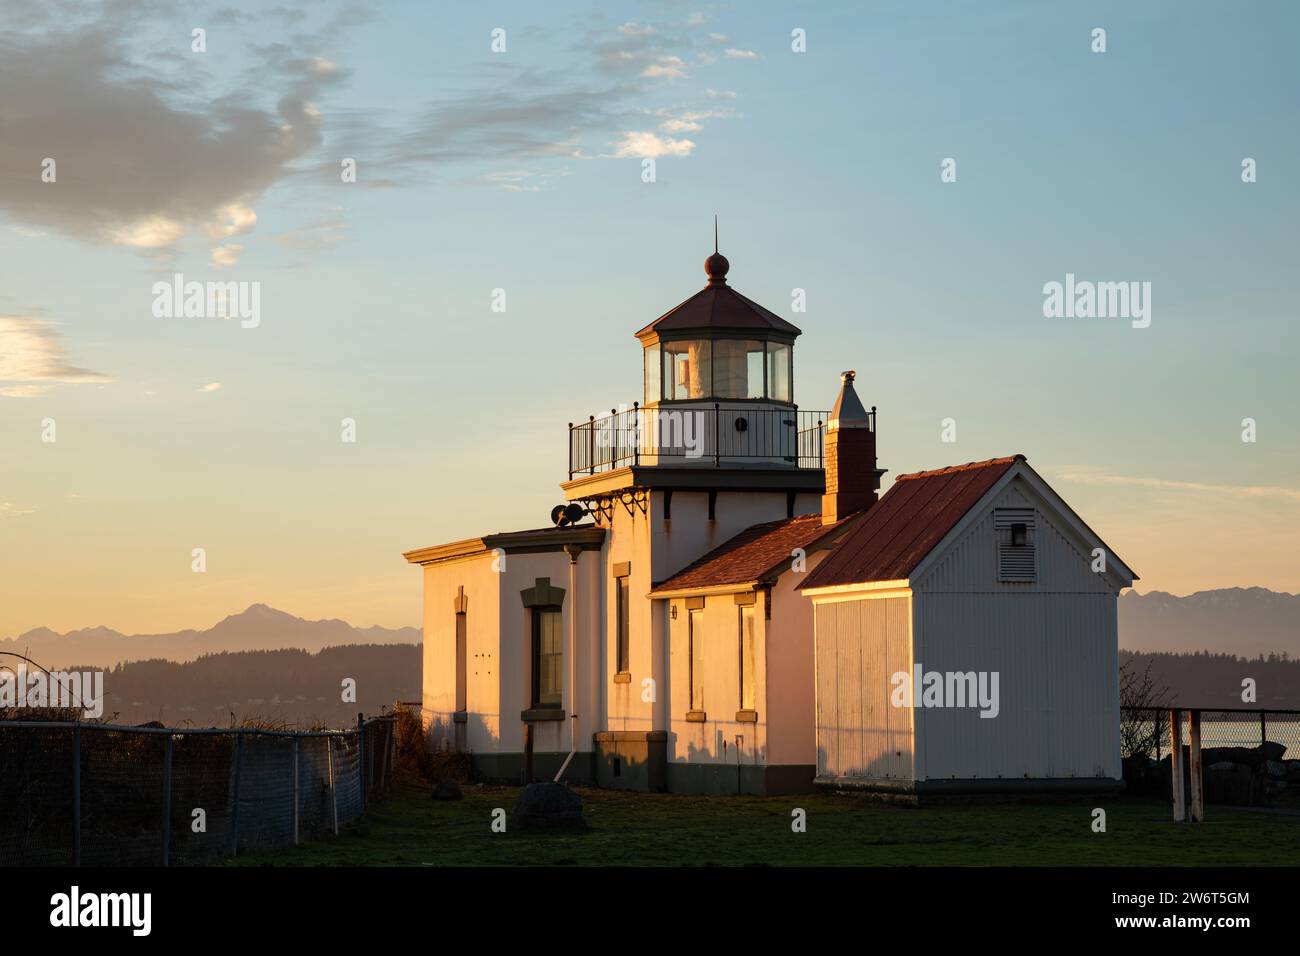 WA23885-00...WASHINGTON - Sonnenuntergang am West Point Lighthouse im Discovery Park von Seattle. Stockfoto